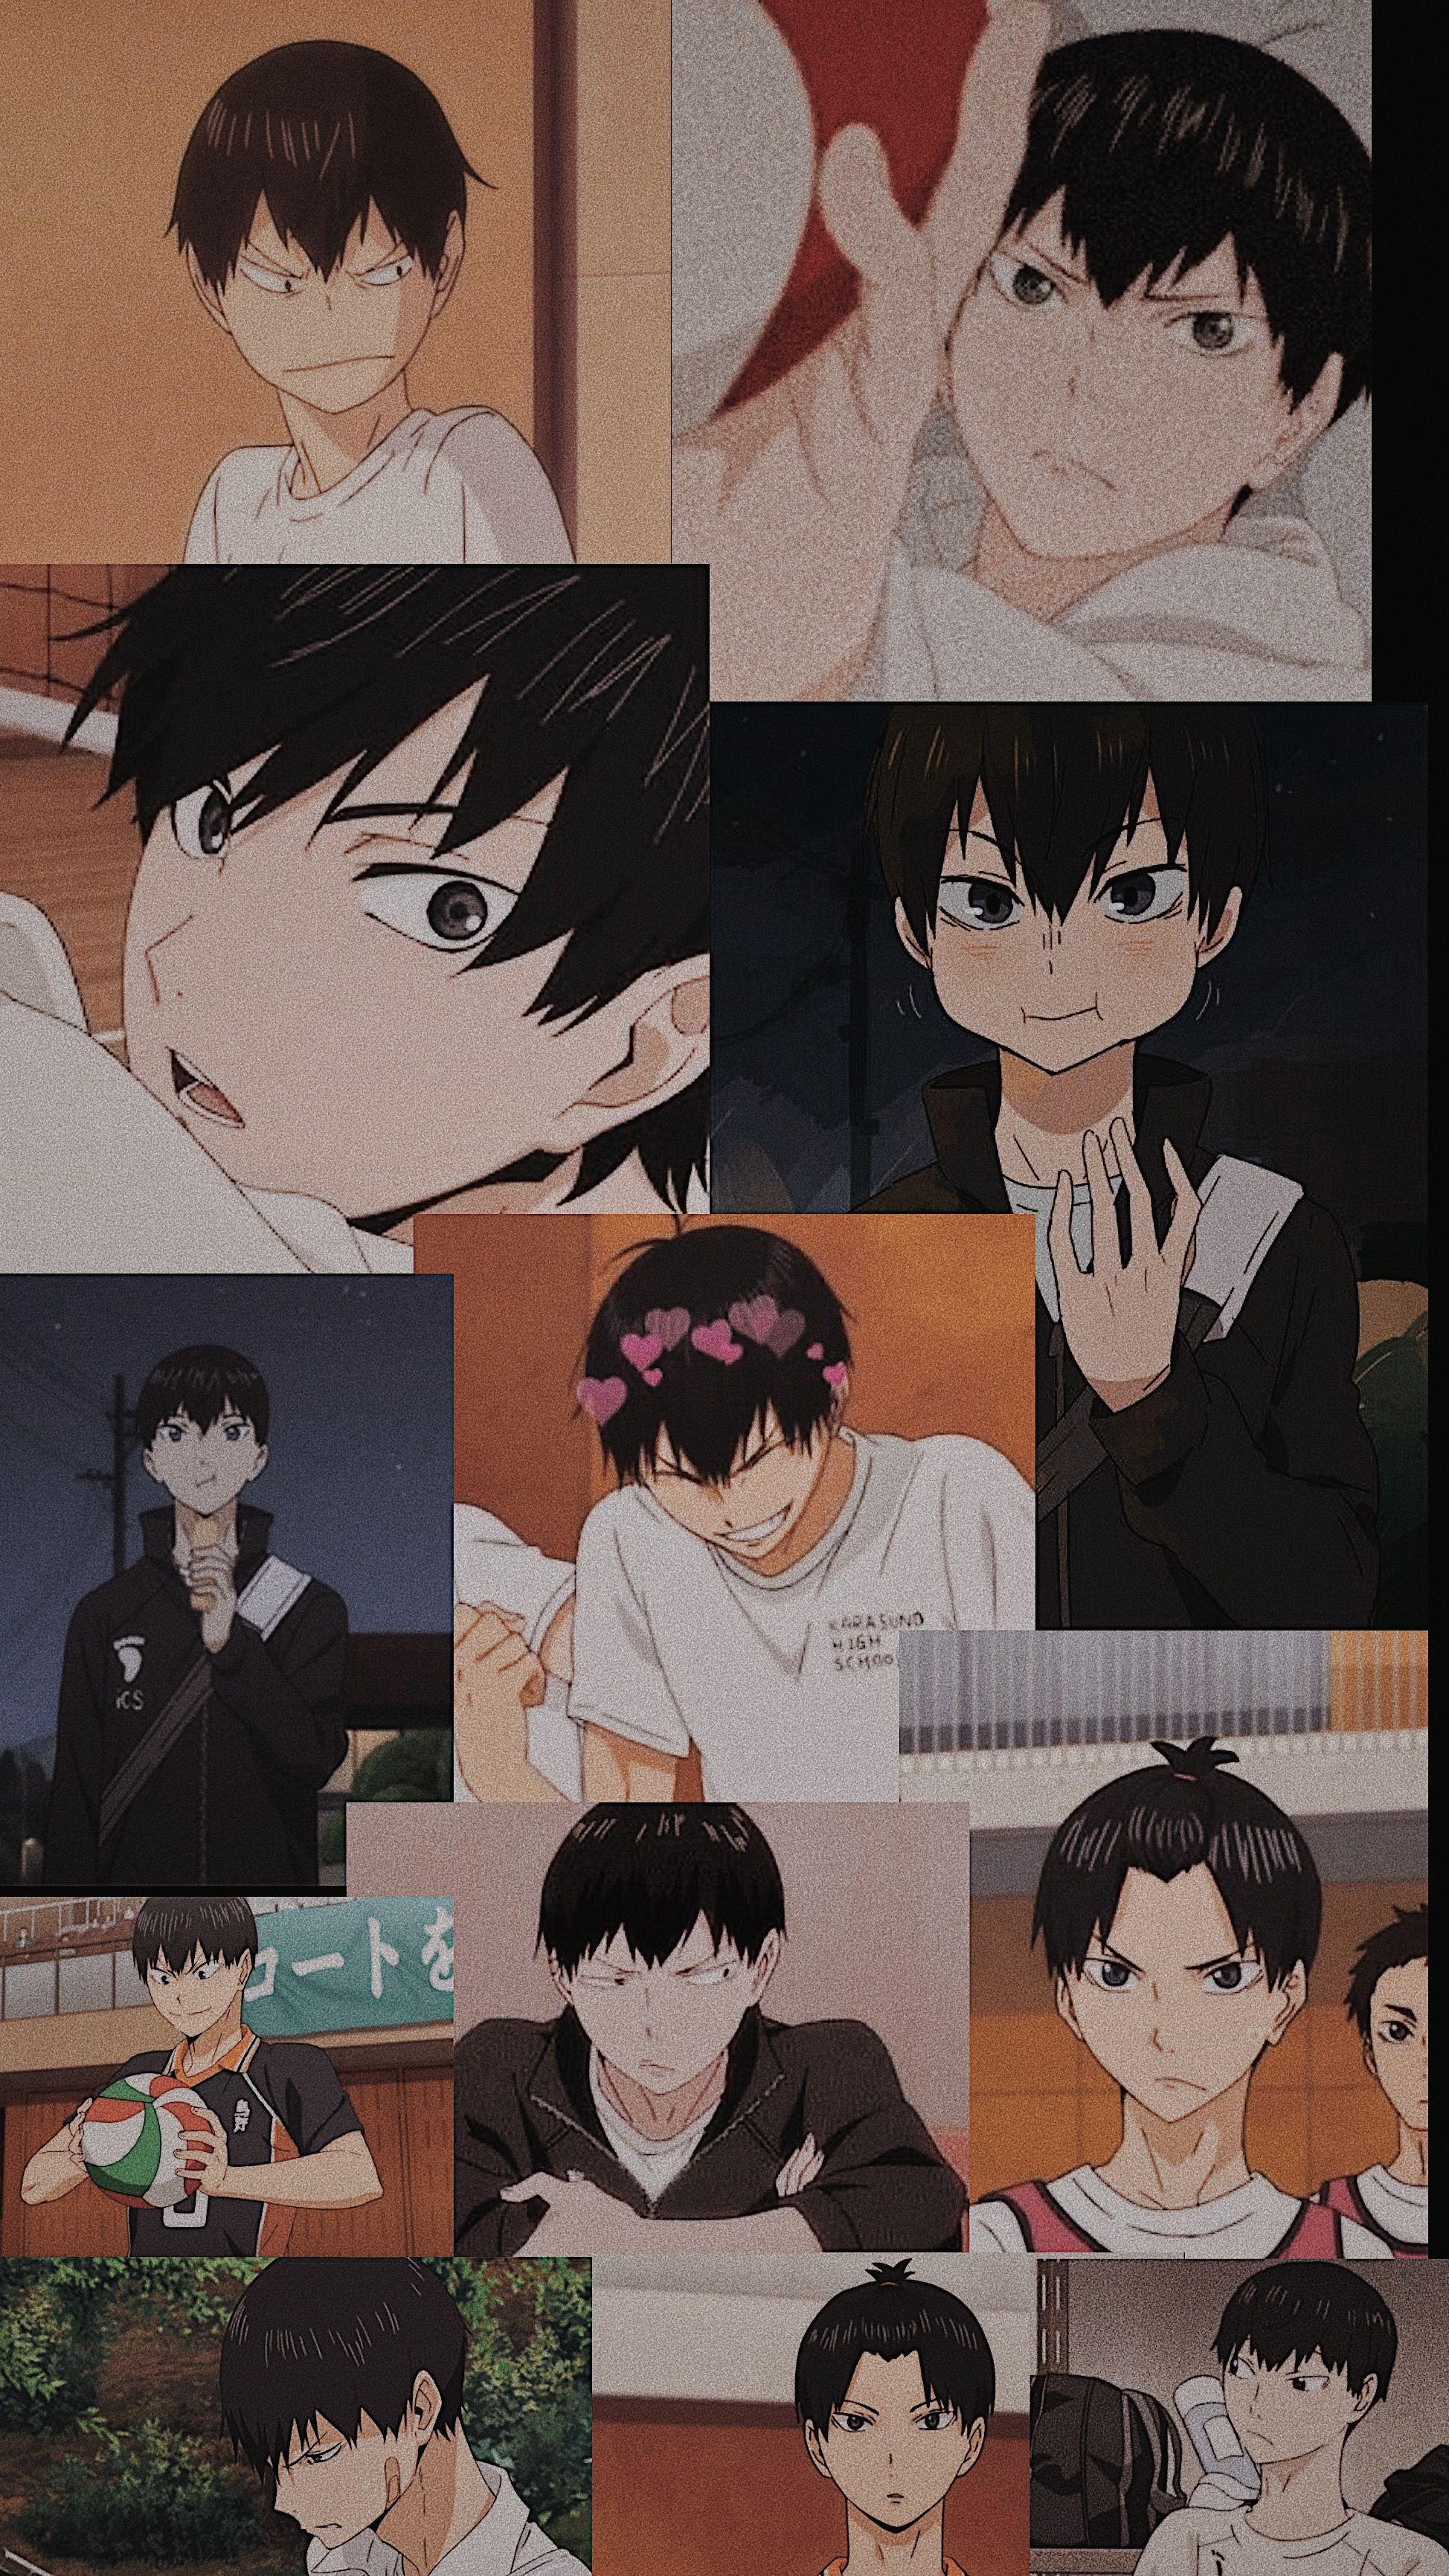 kageyama aesthetic wallpaper///. Anime, Cute anime wallpaper, Anime guys